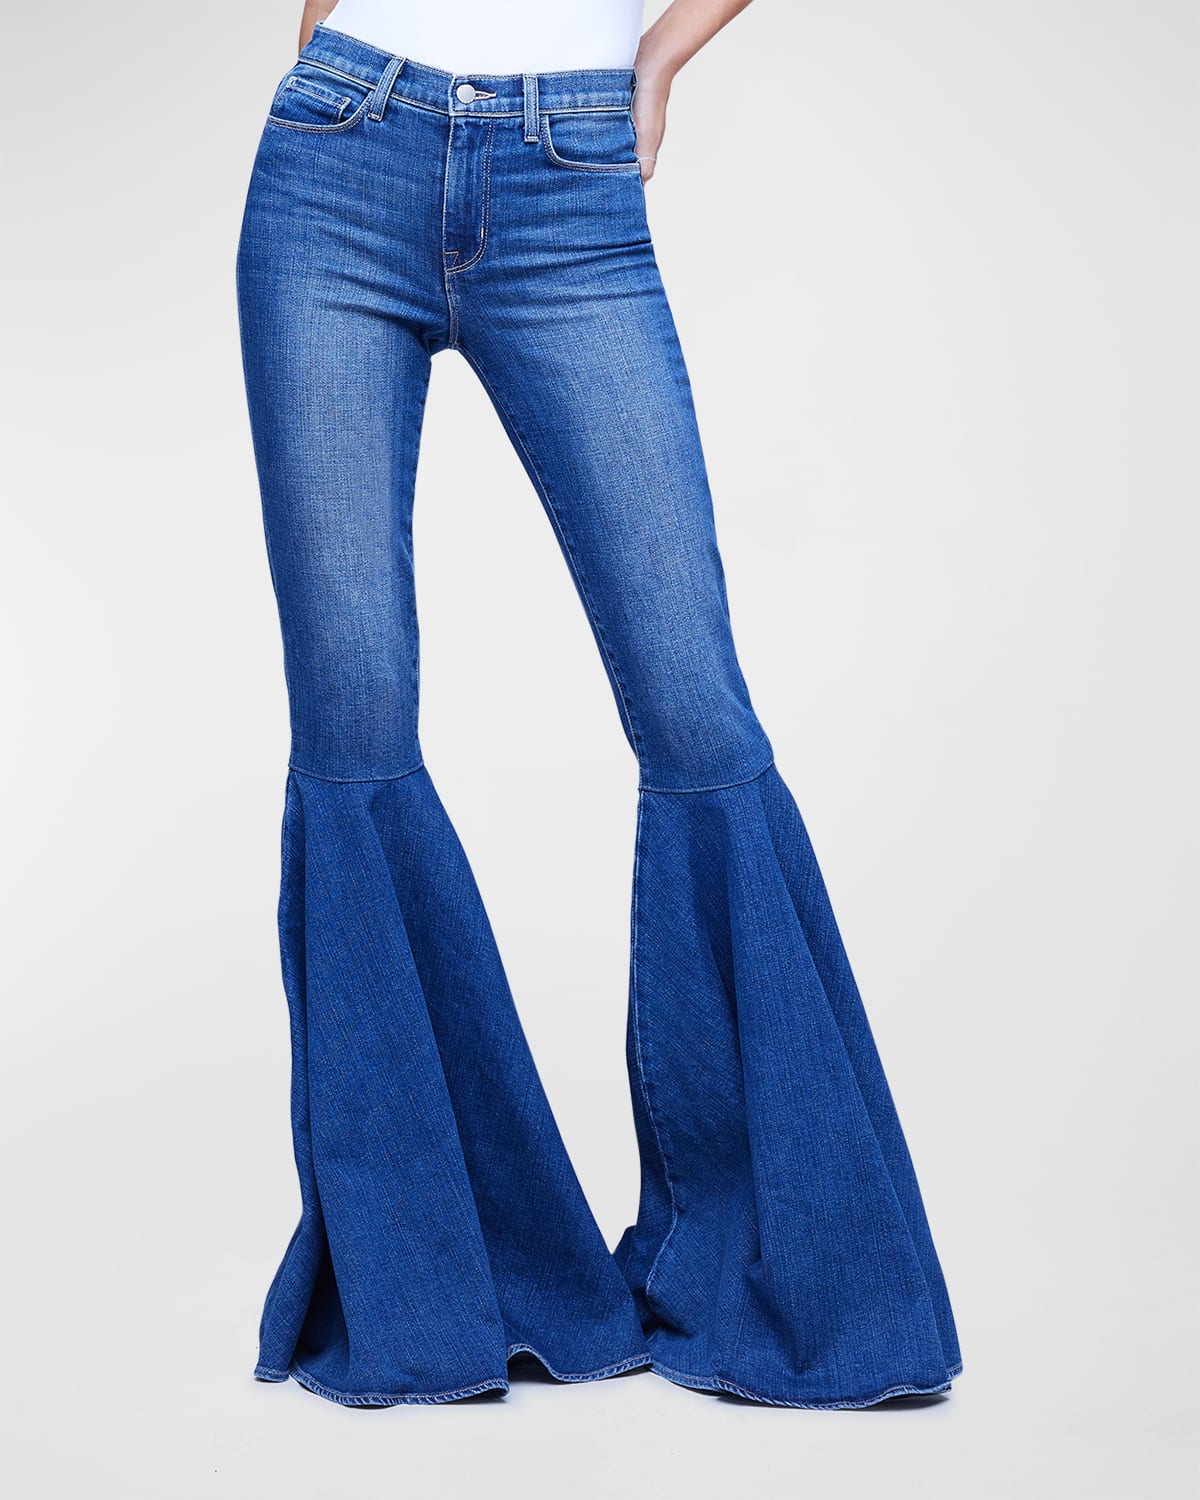 L'Agence Sevyn High-Rise Ultra Flared Jeans